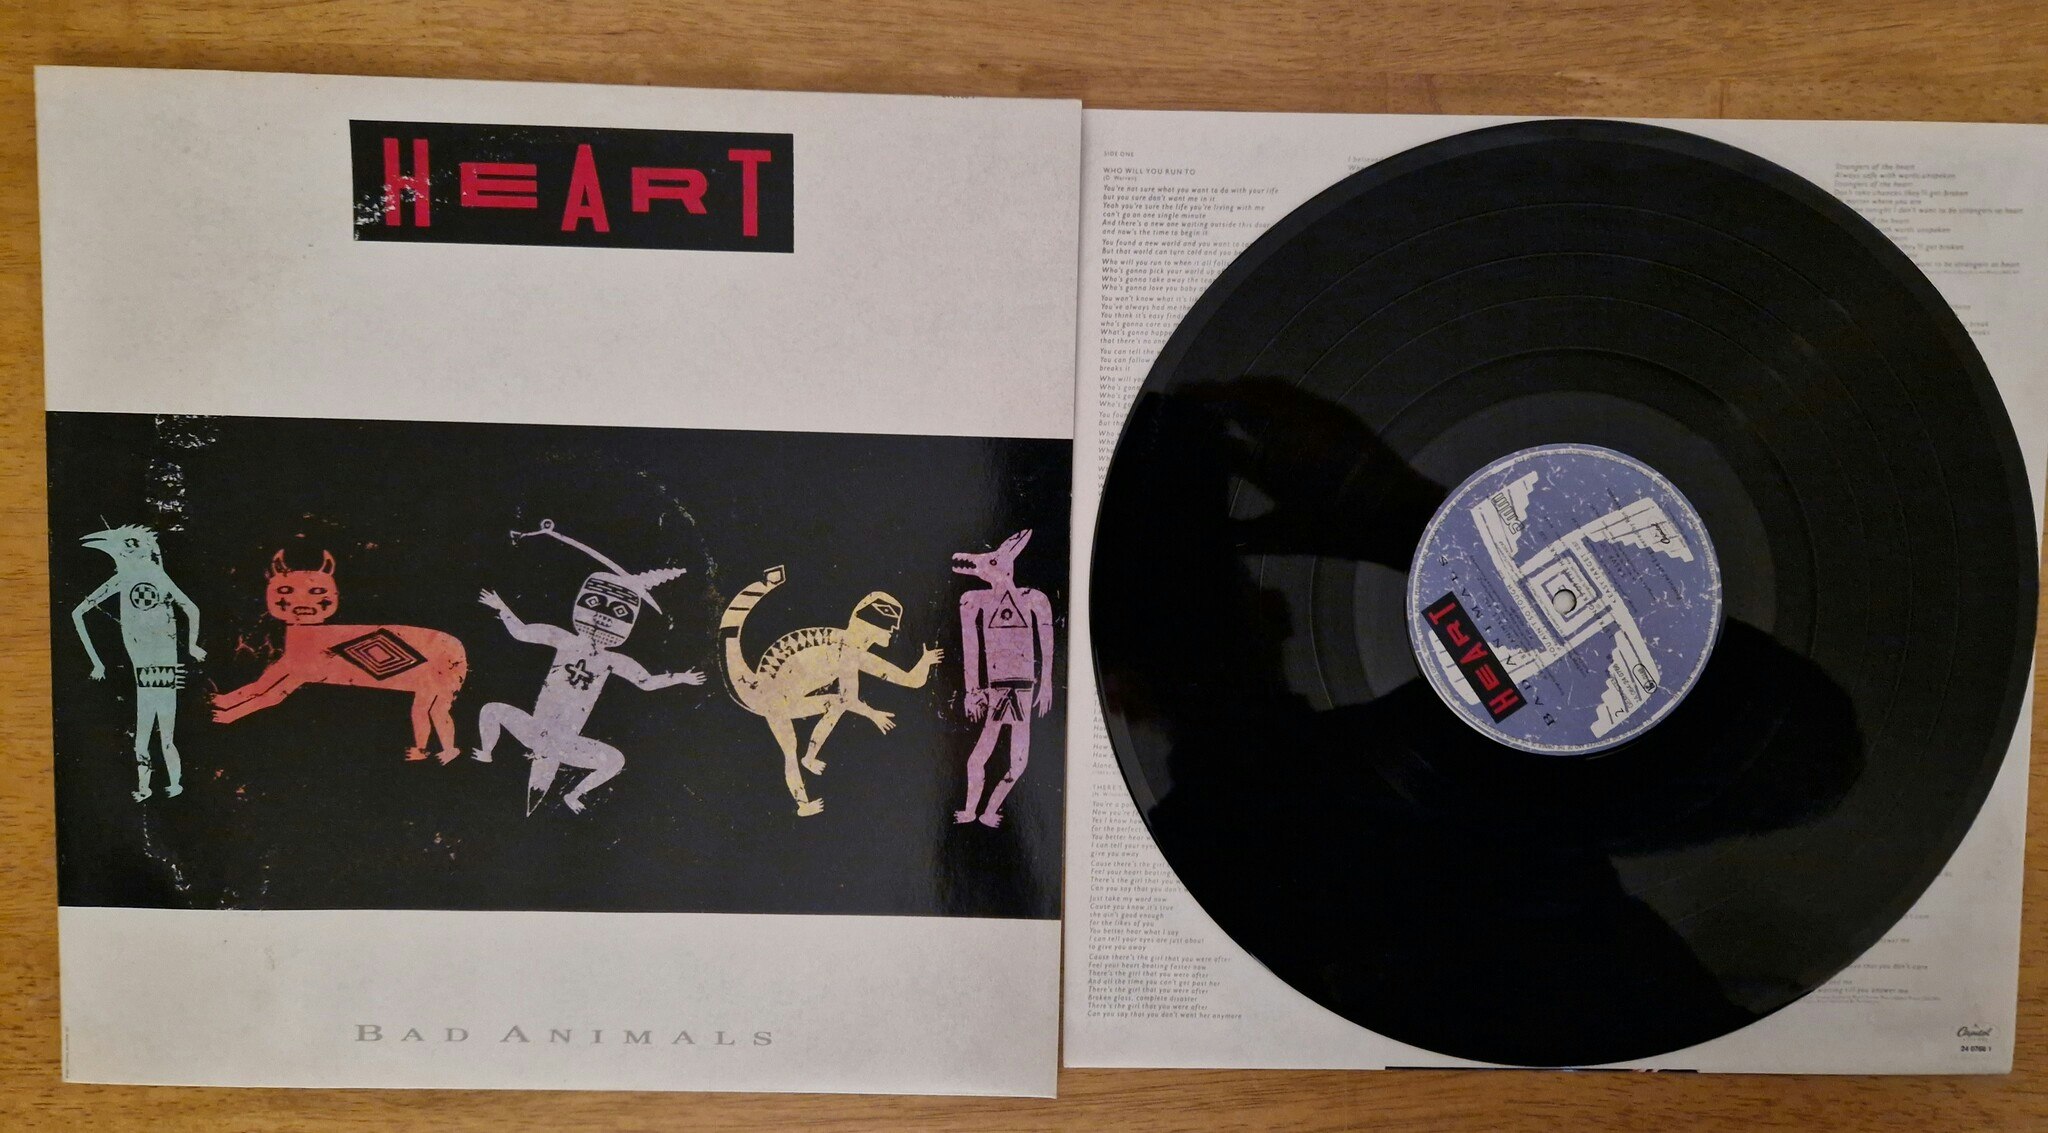 Heart, Bad animals. Vinyl LP